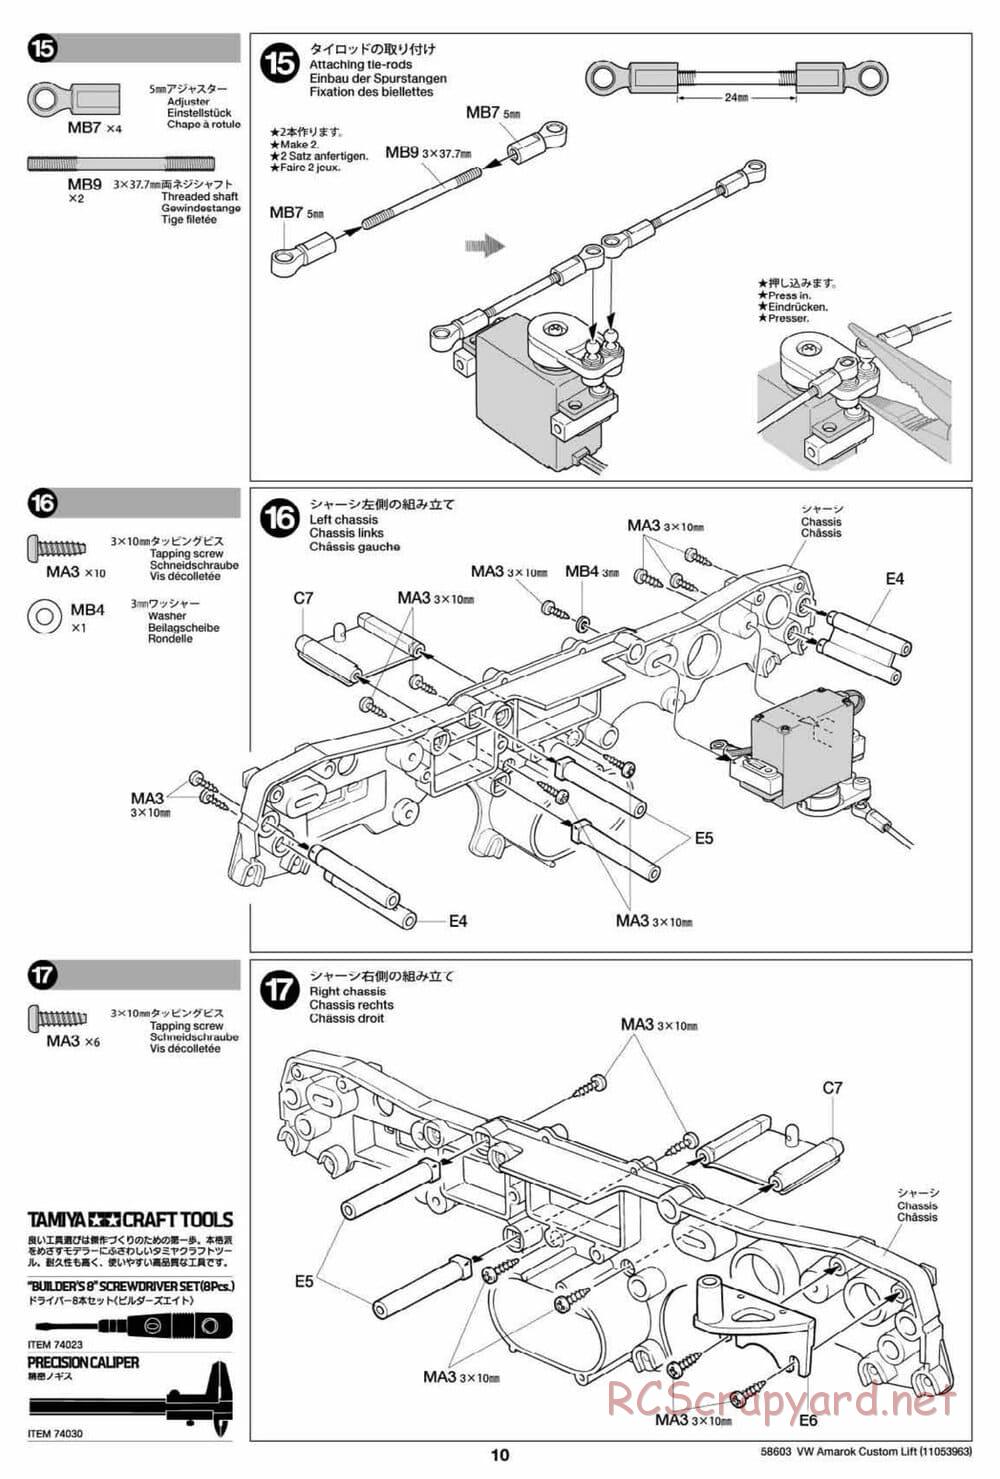 Tamiya - Volkswagen Amarok Custom Lift - WT-01N Chassis - Manual - Page 10